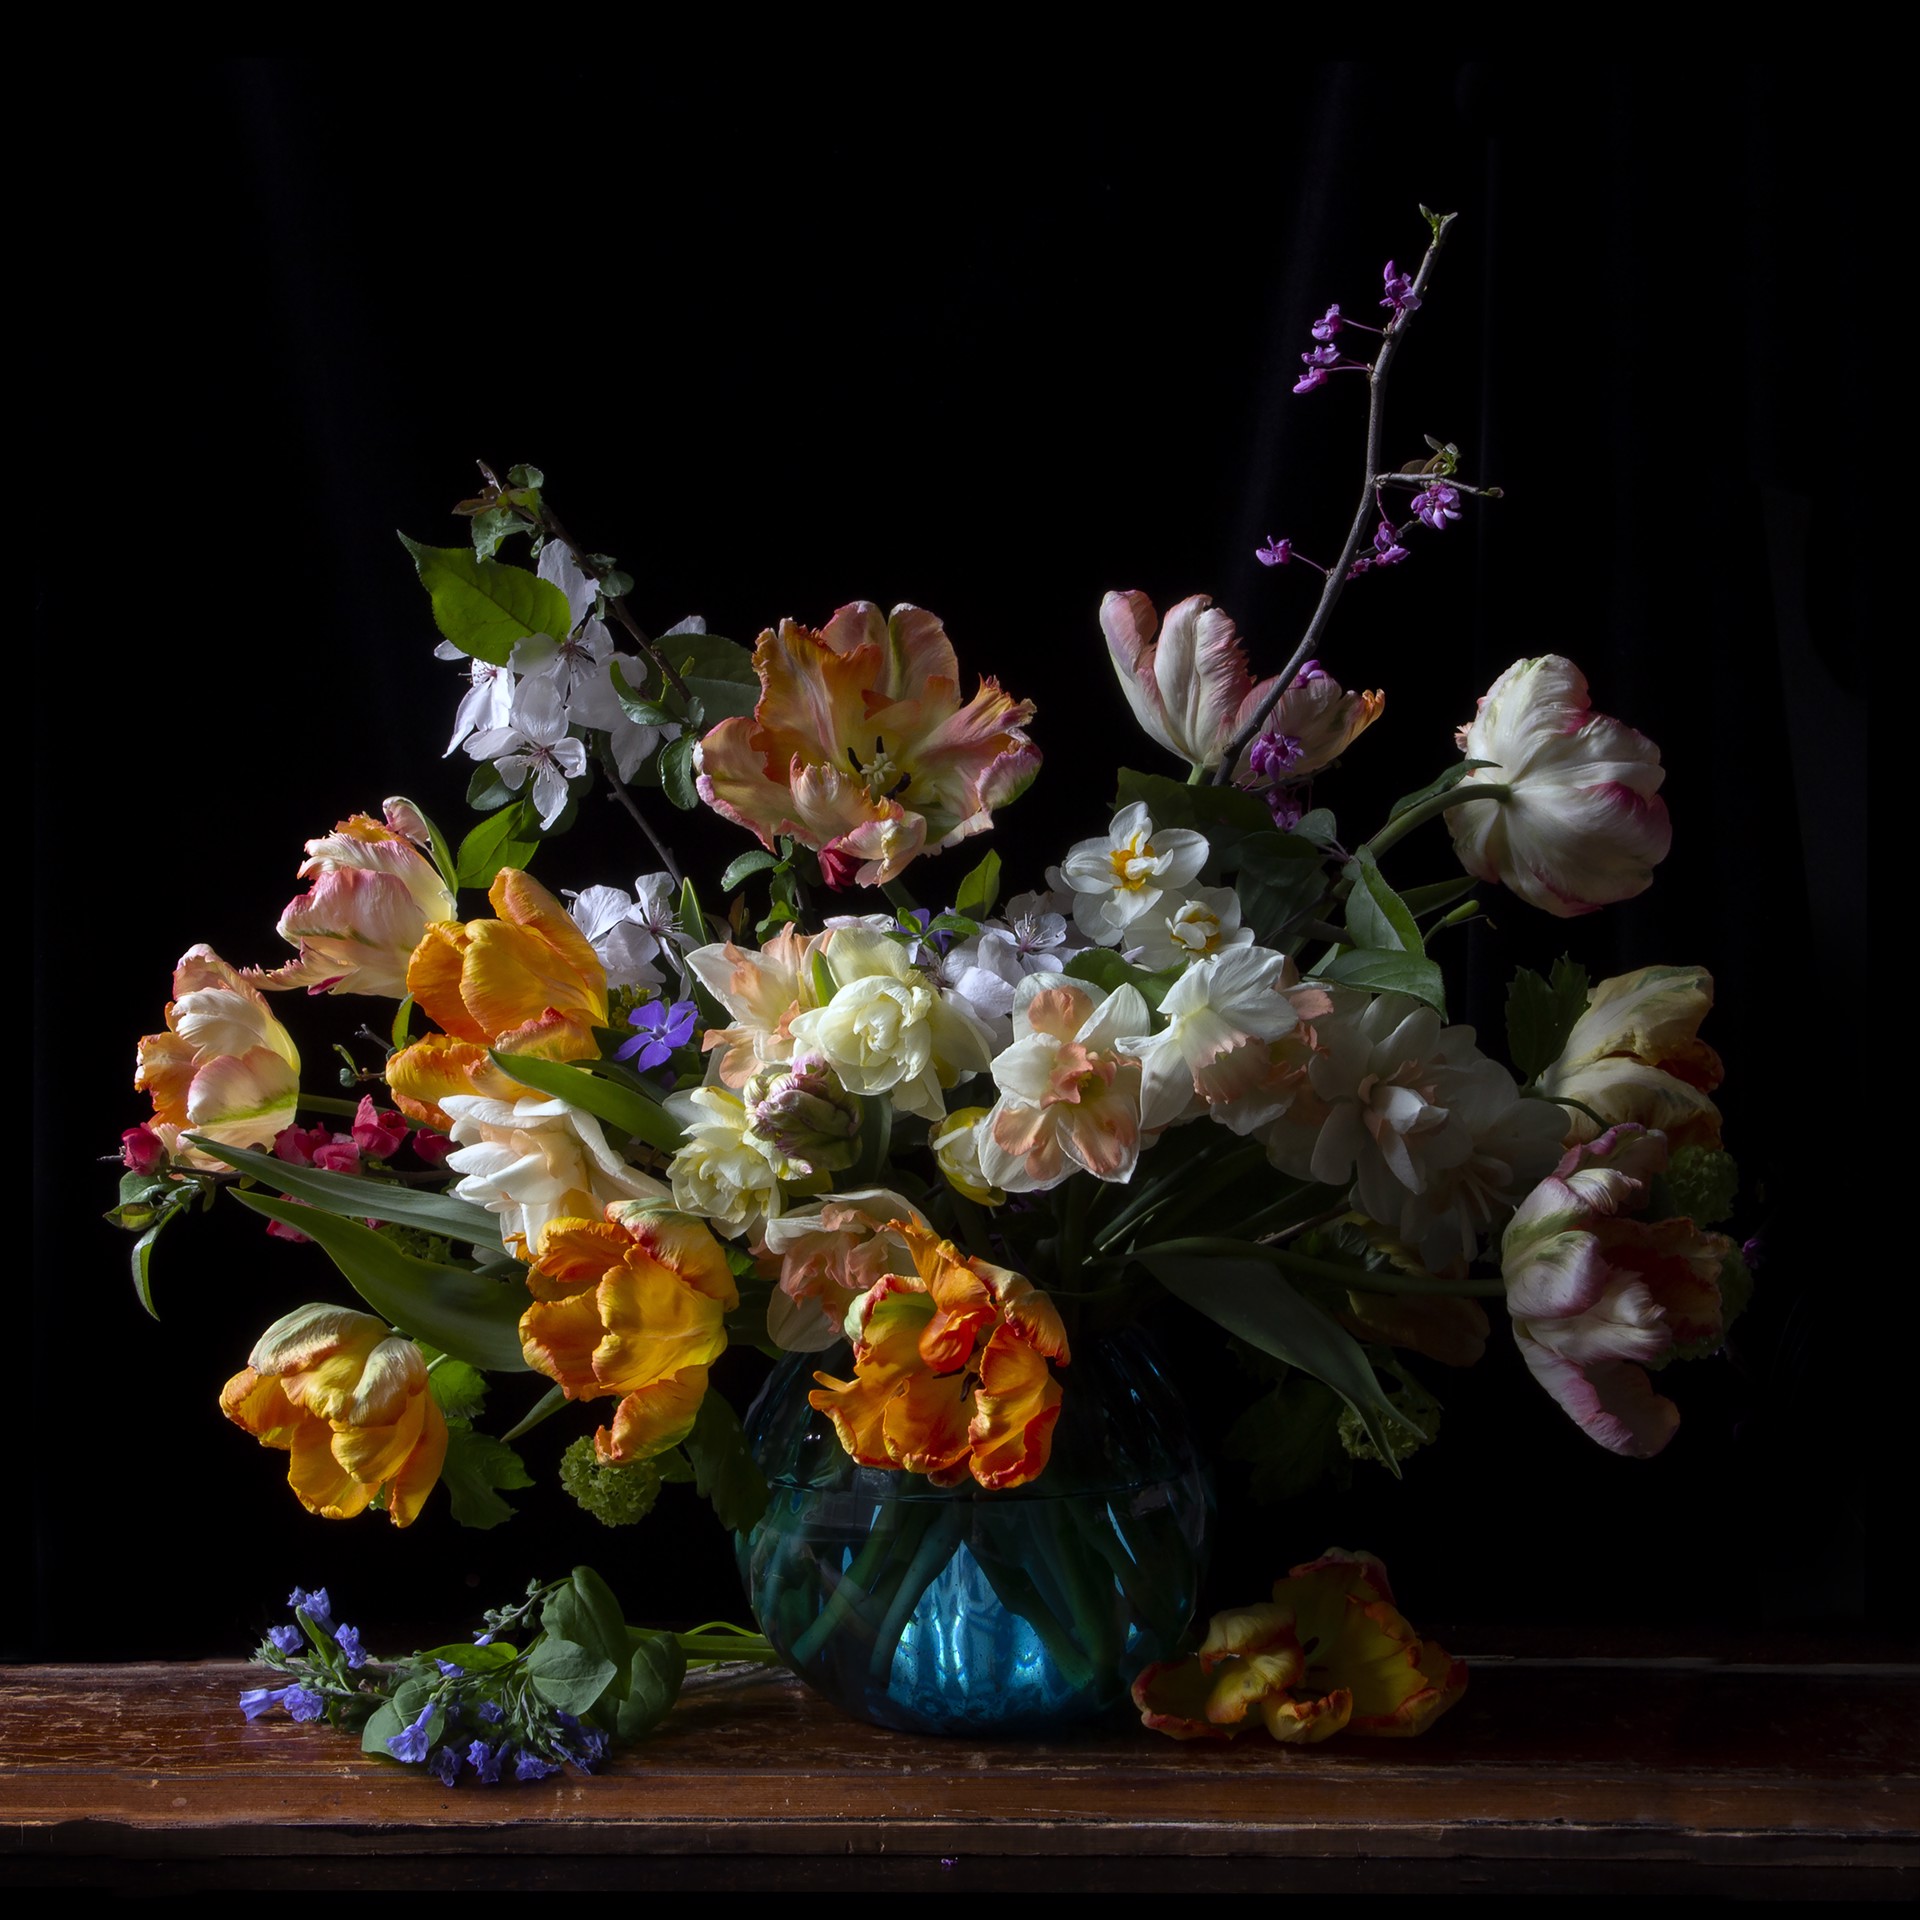 Vanitas with Orange Tulips, 0755 by Molly Wood